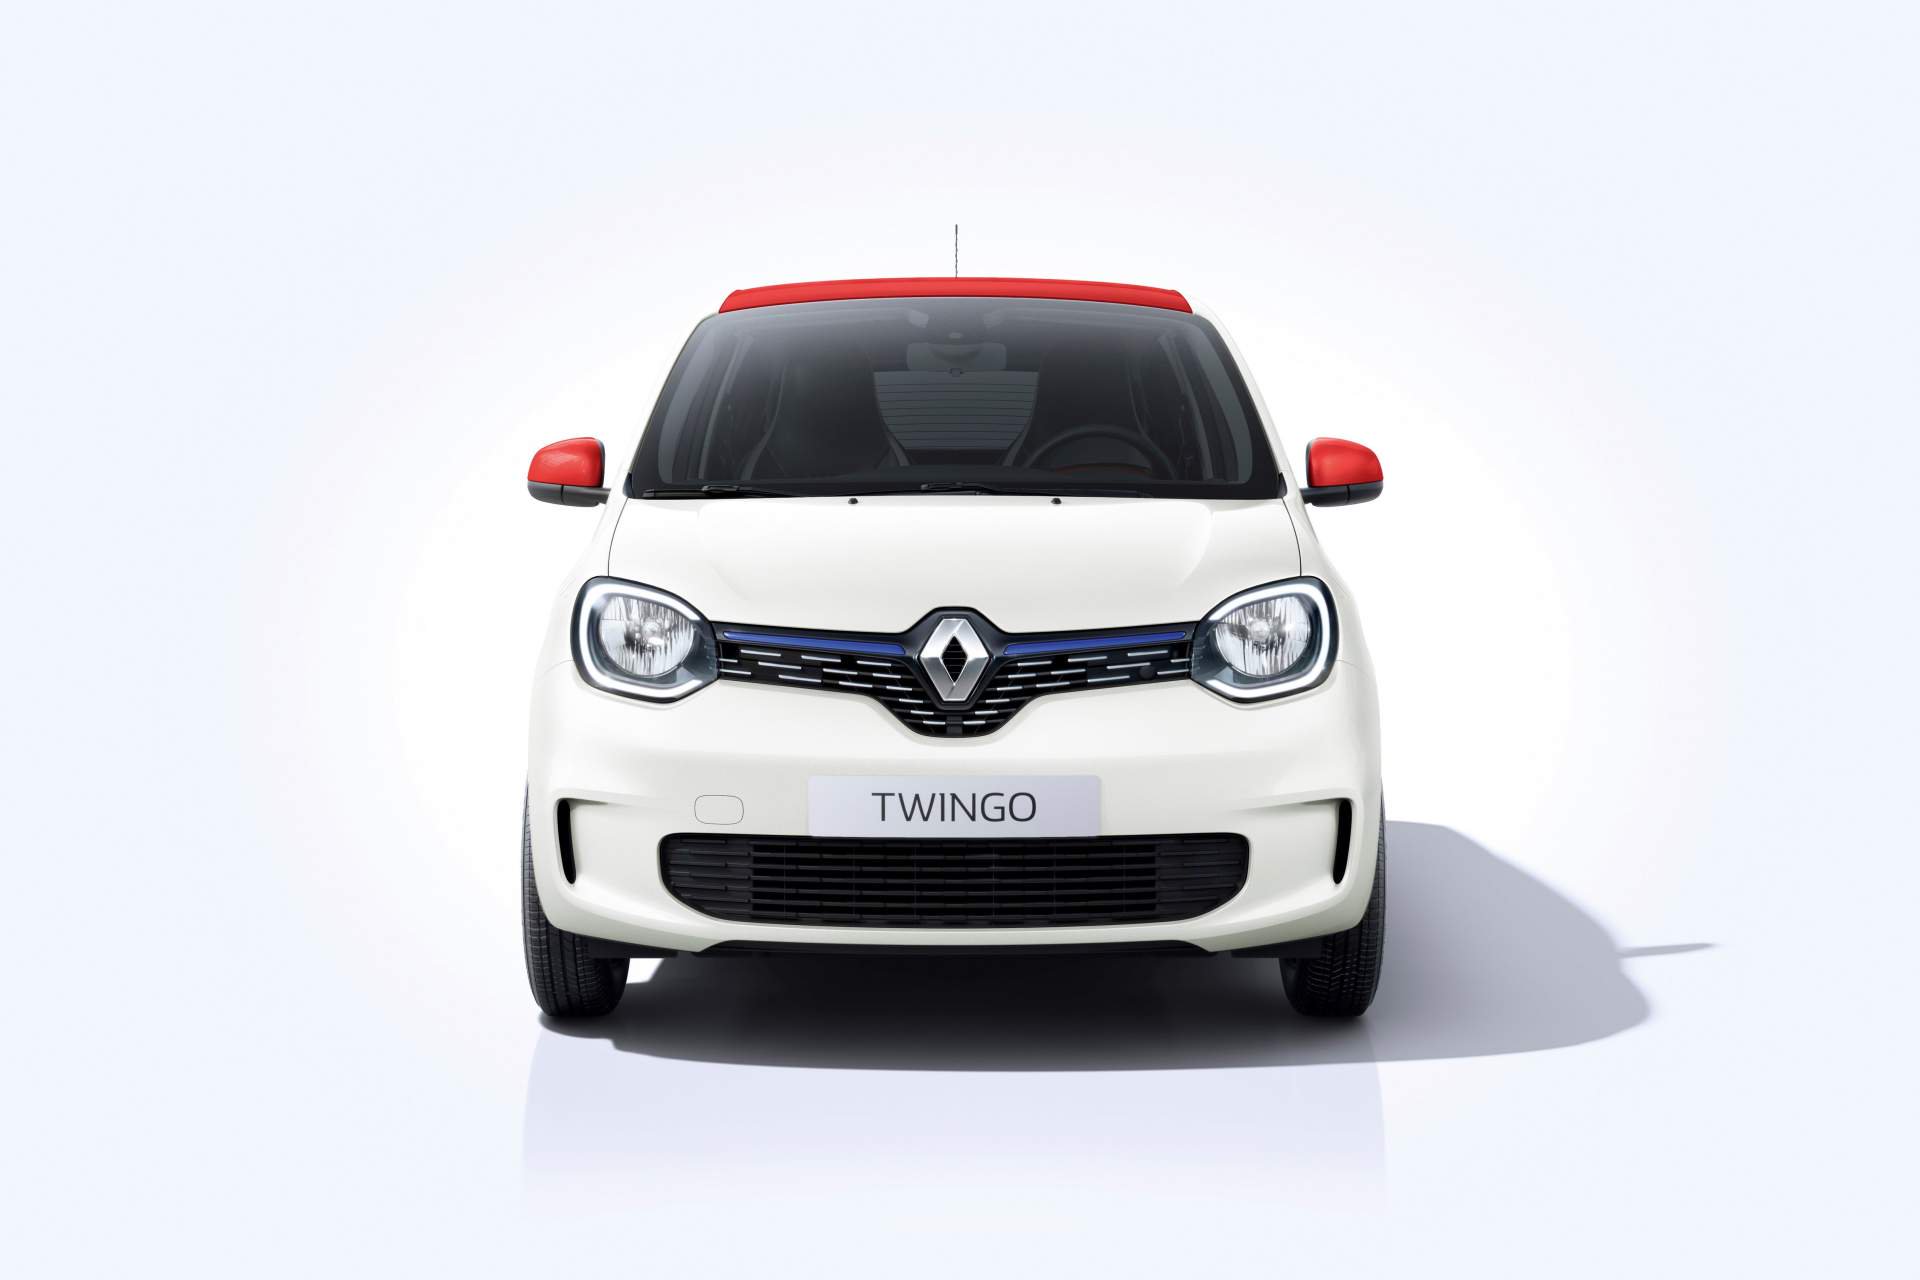 2019 Renault Twingo Le Coq Sportif resim galerisi (25.01.2018)